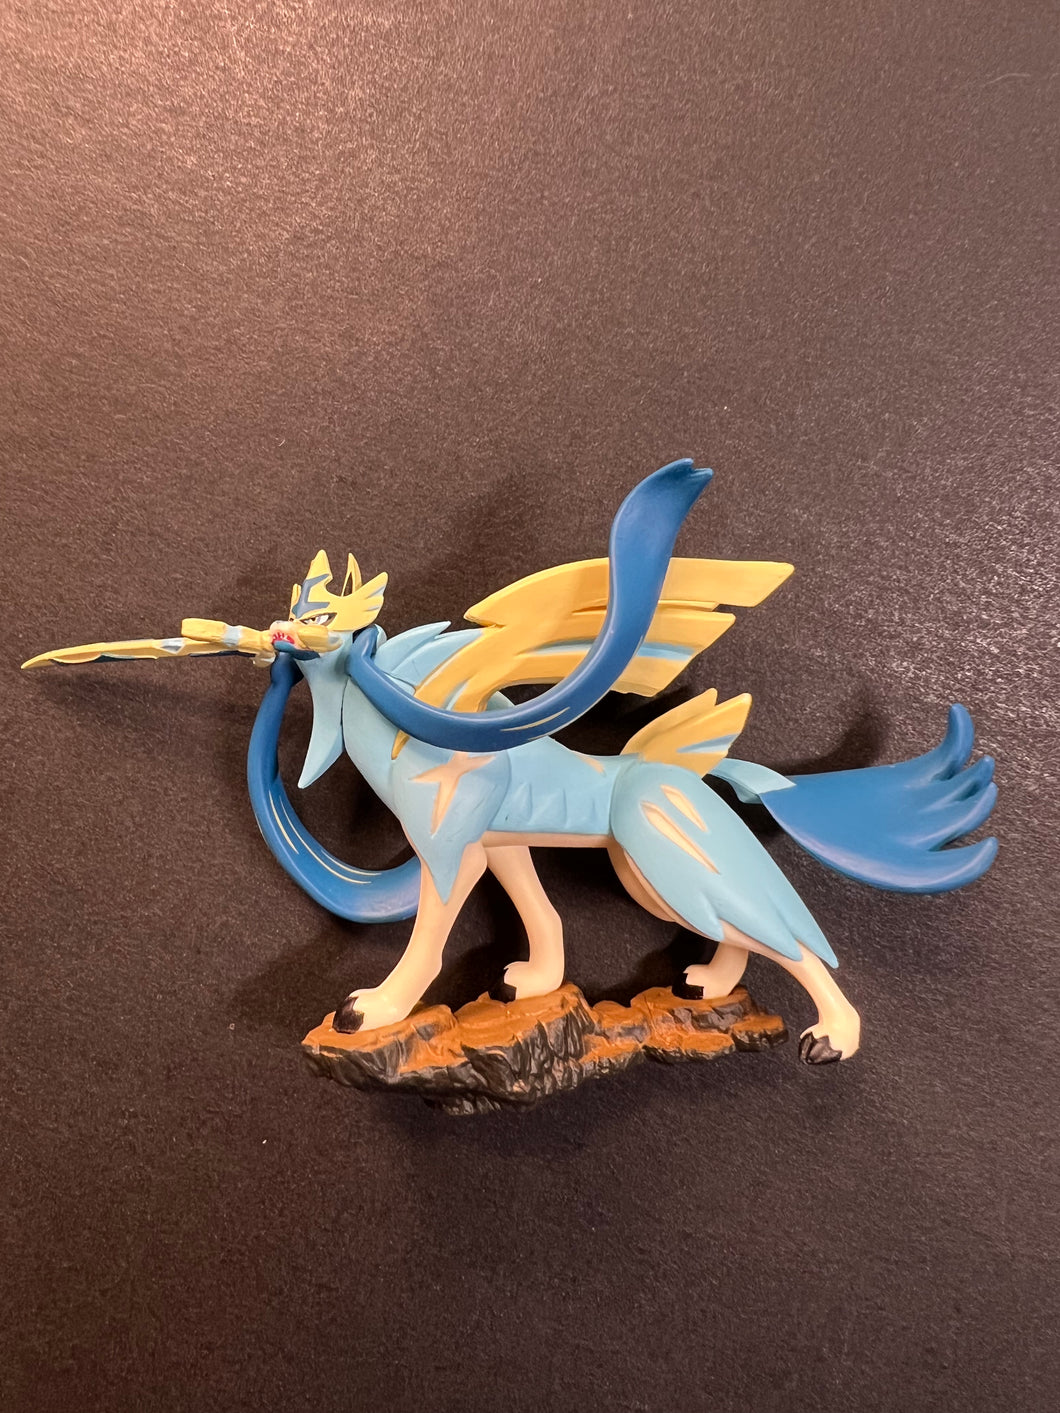 Shiny Zacian Official Pokemon Figure